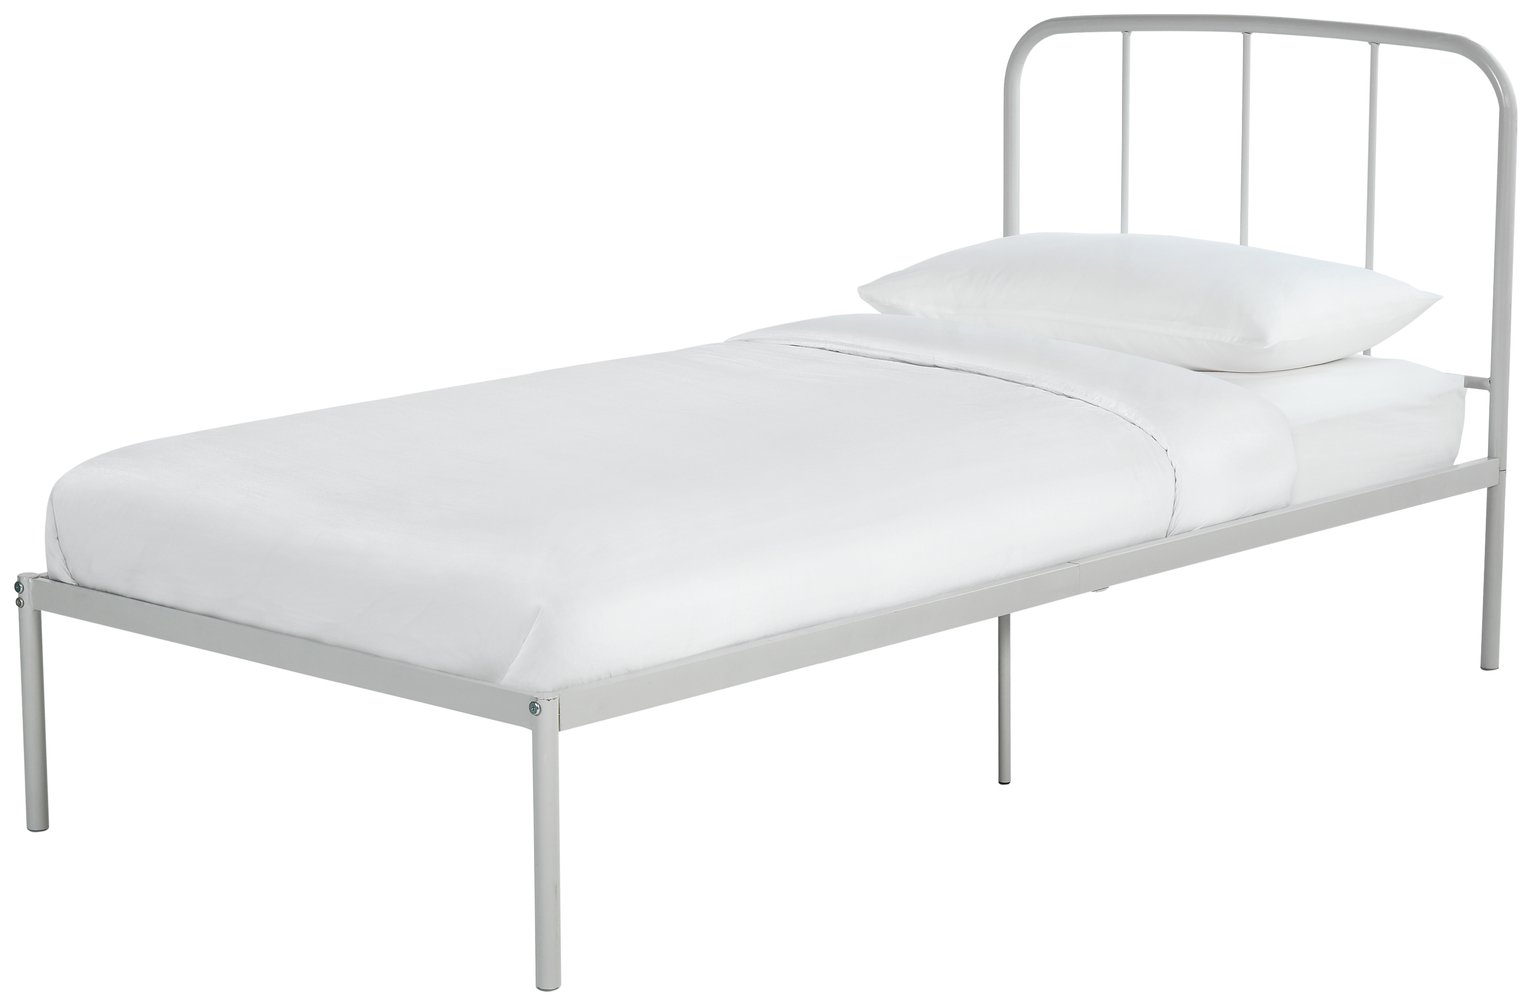 Argos Home Freja Single Bed Frame review